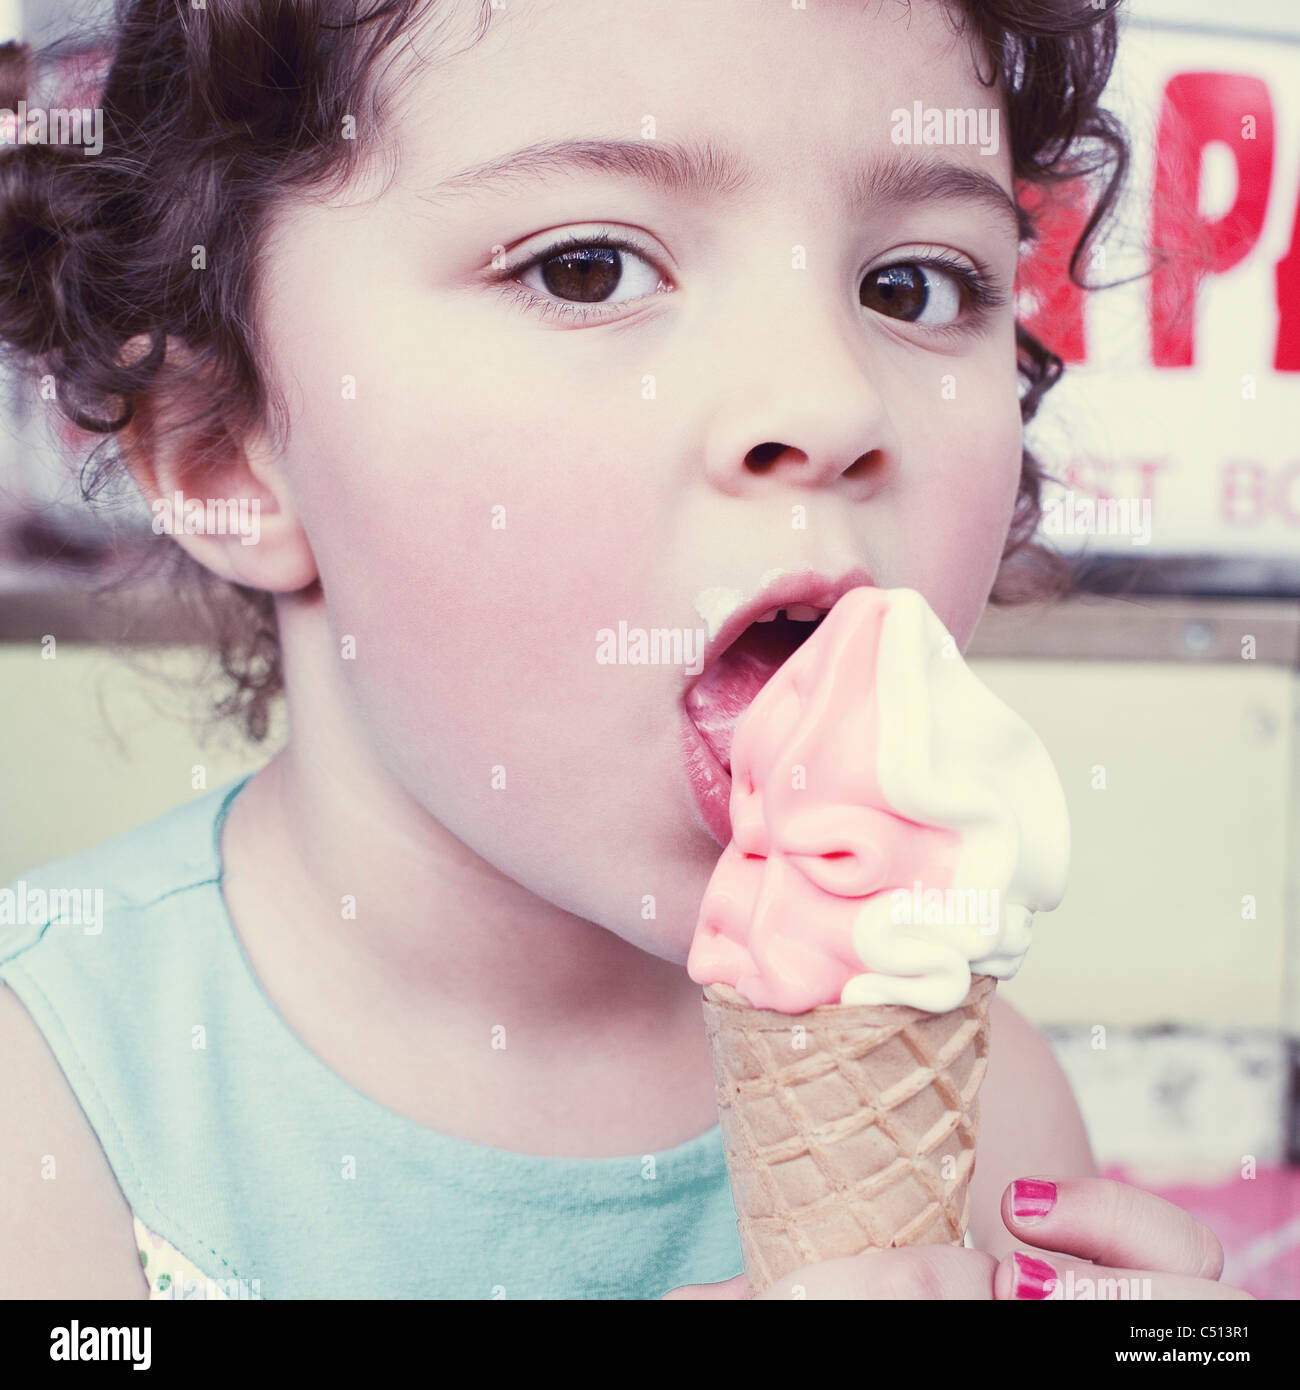 Little girl eating soft serve ice cream, portrait Stock Photo